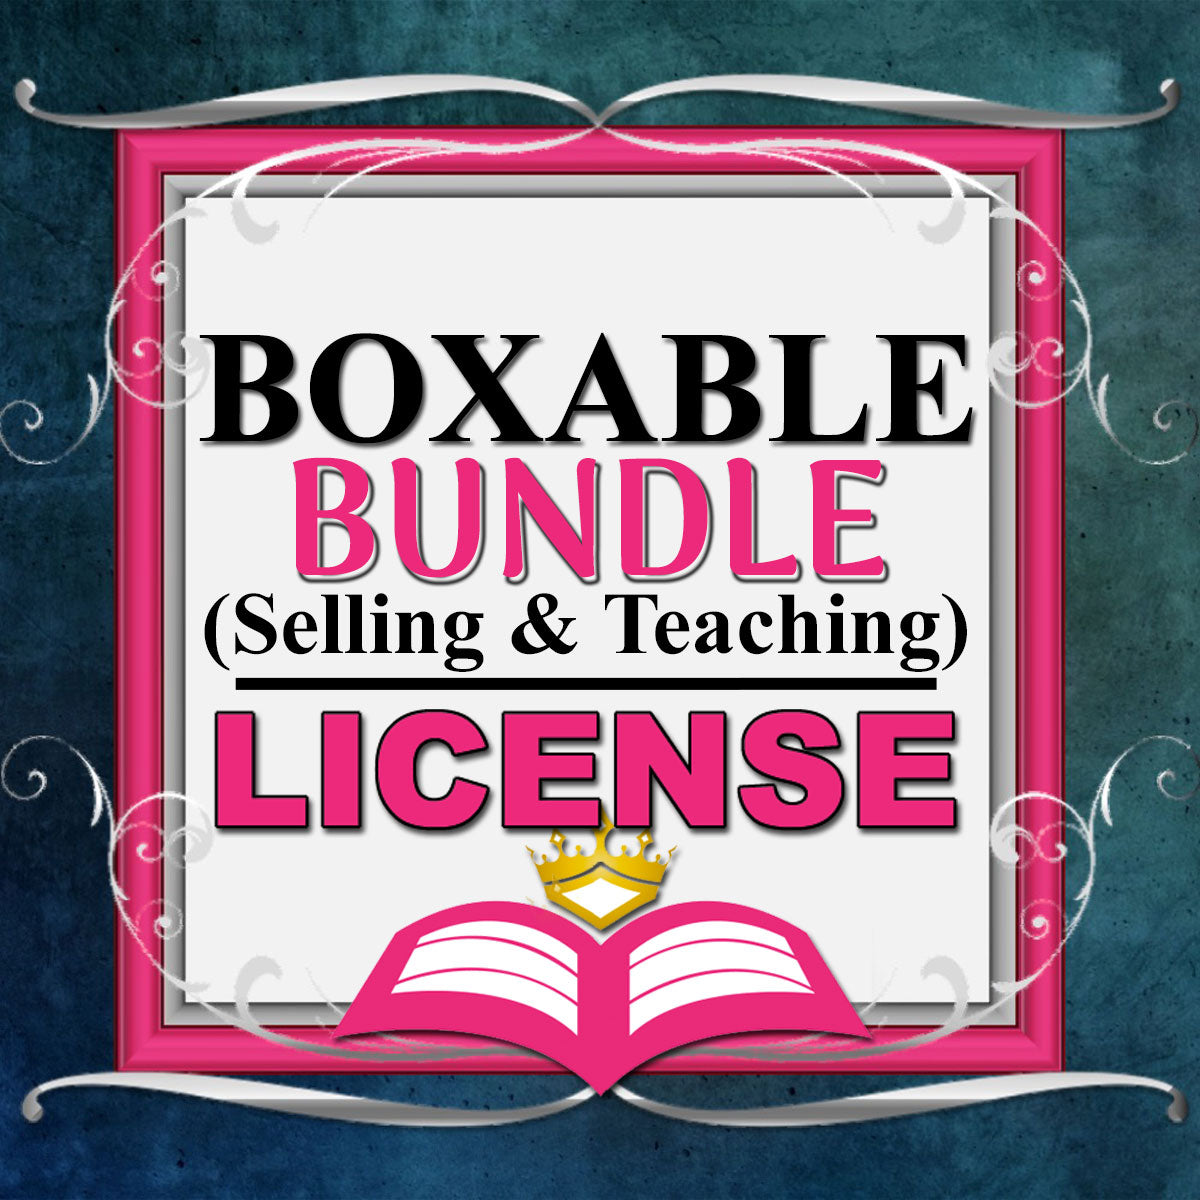 Selling/Teaching License Bundle